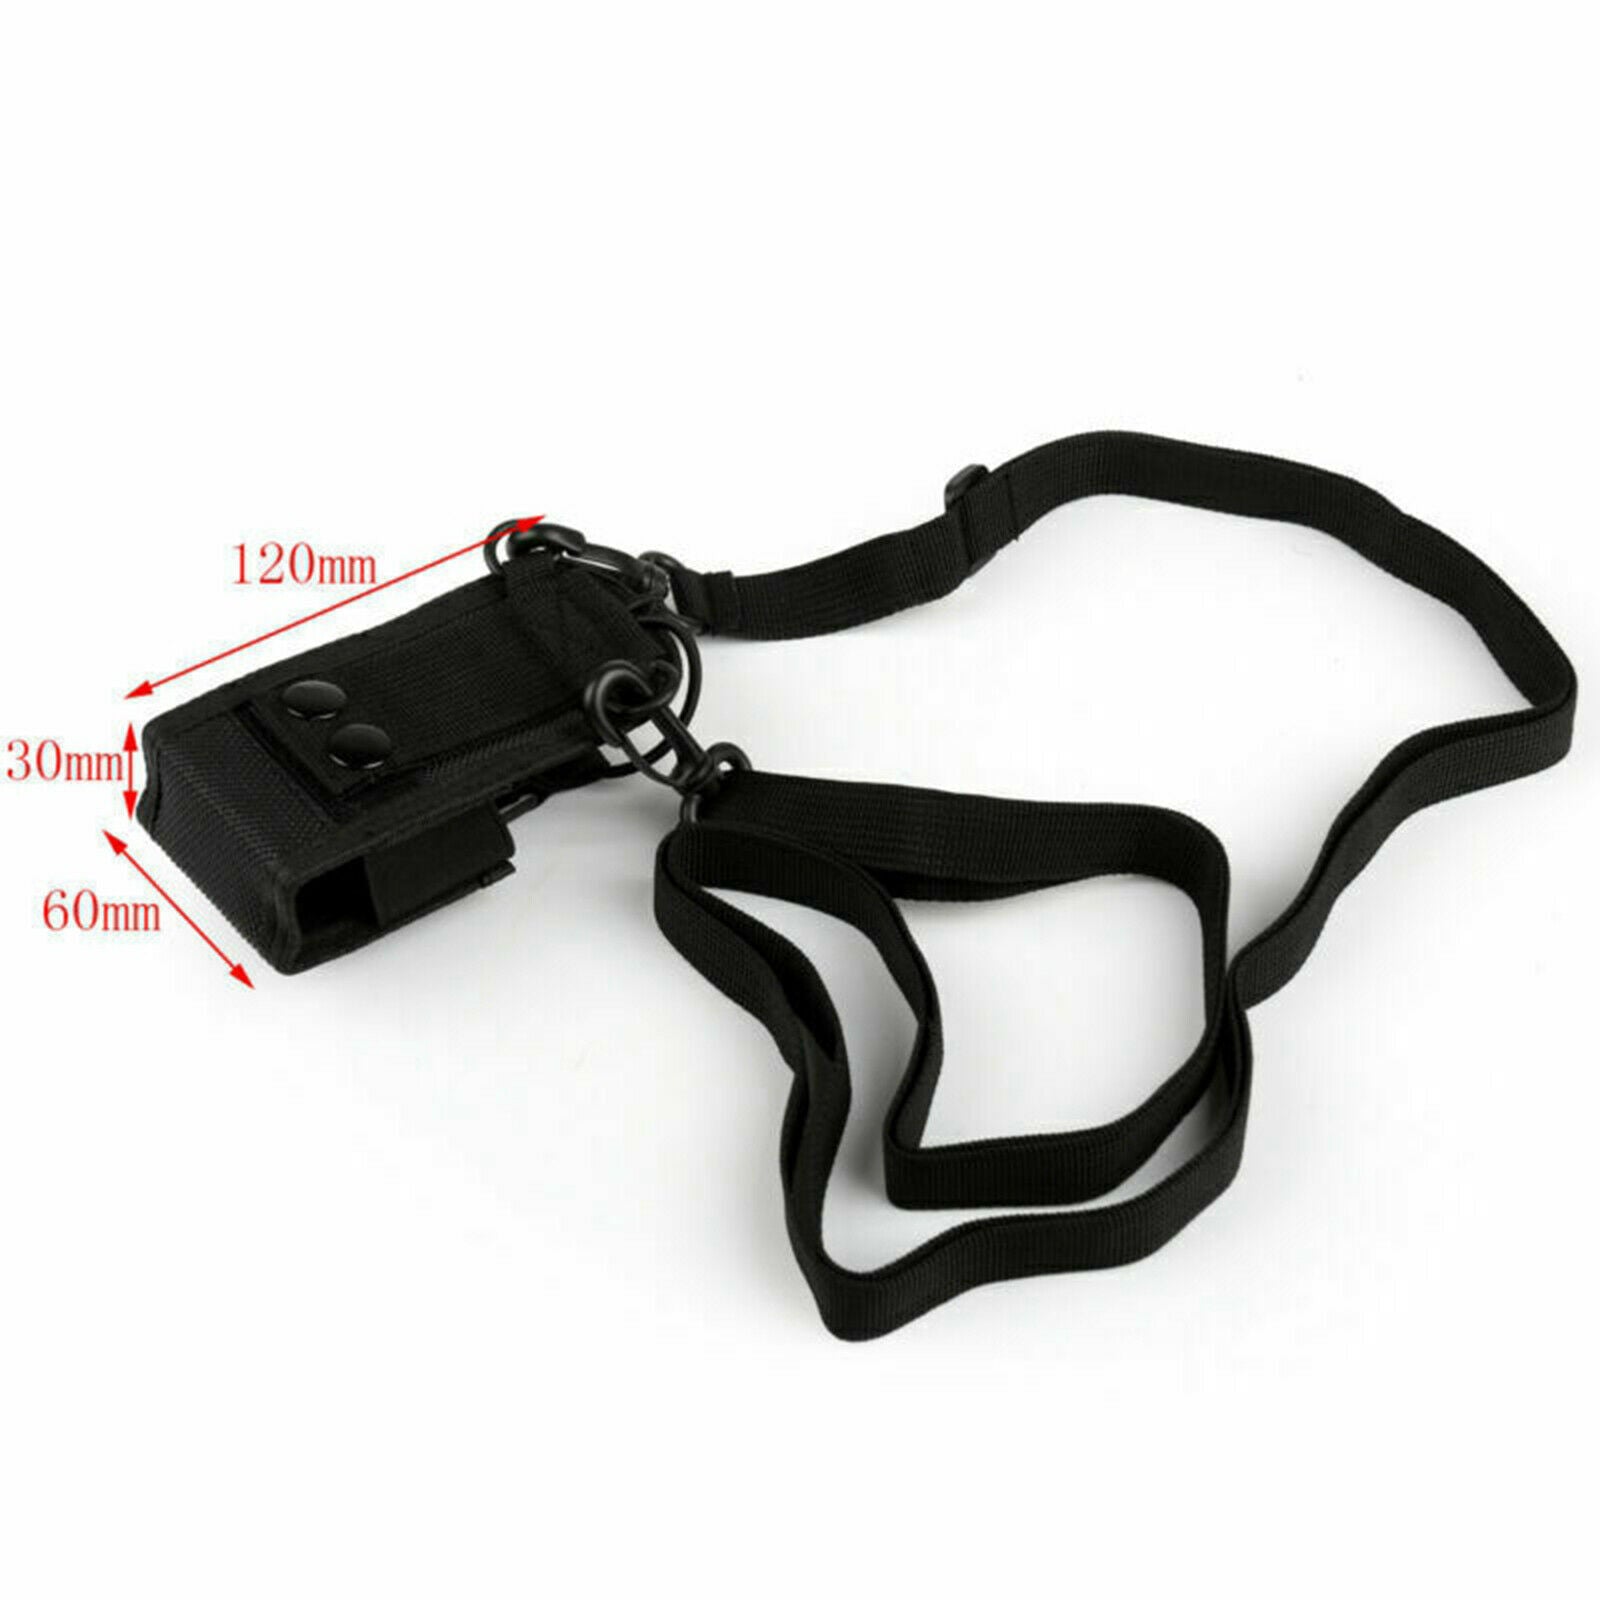 Multi-Function Radio Holder Case Bag with Sling Radio Talkie Accessory Black